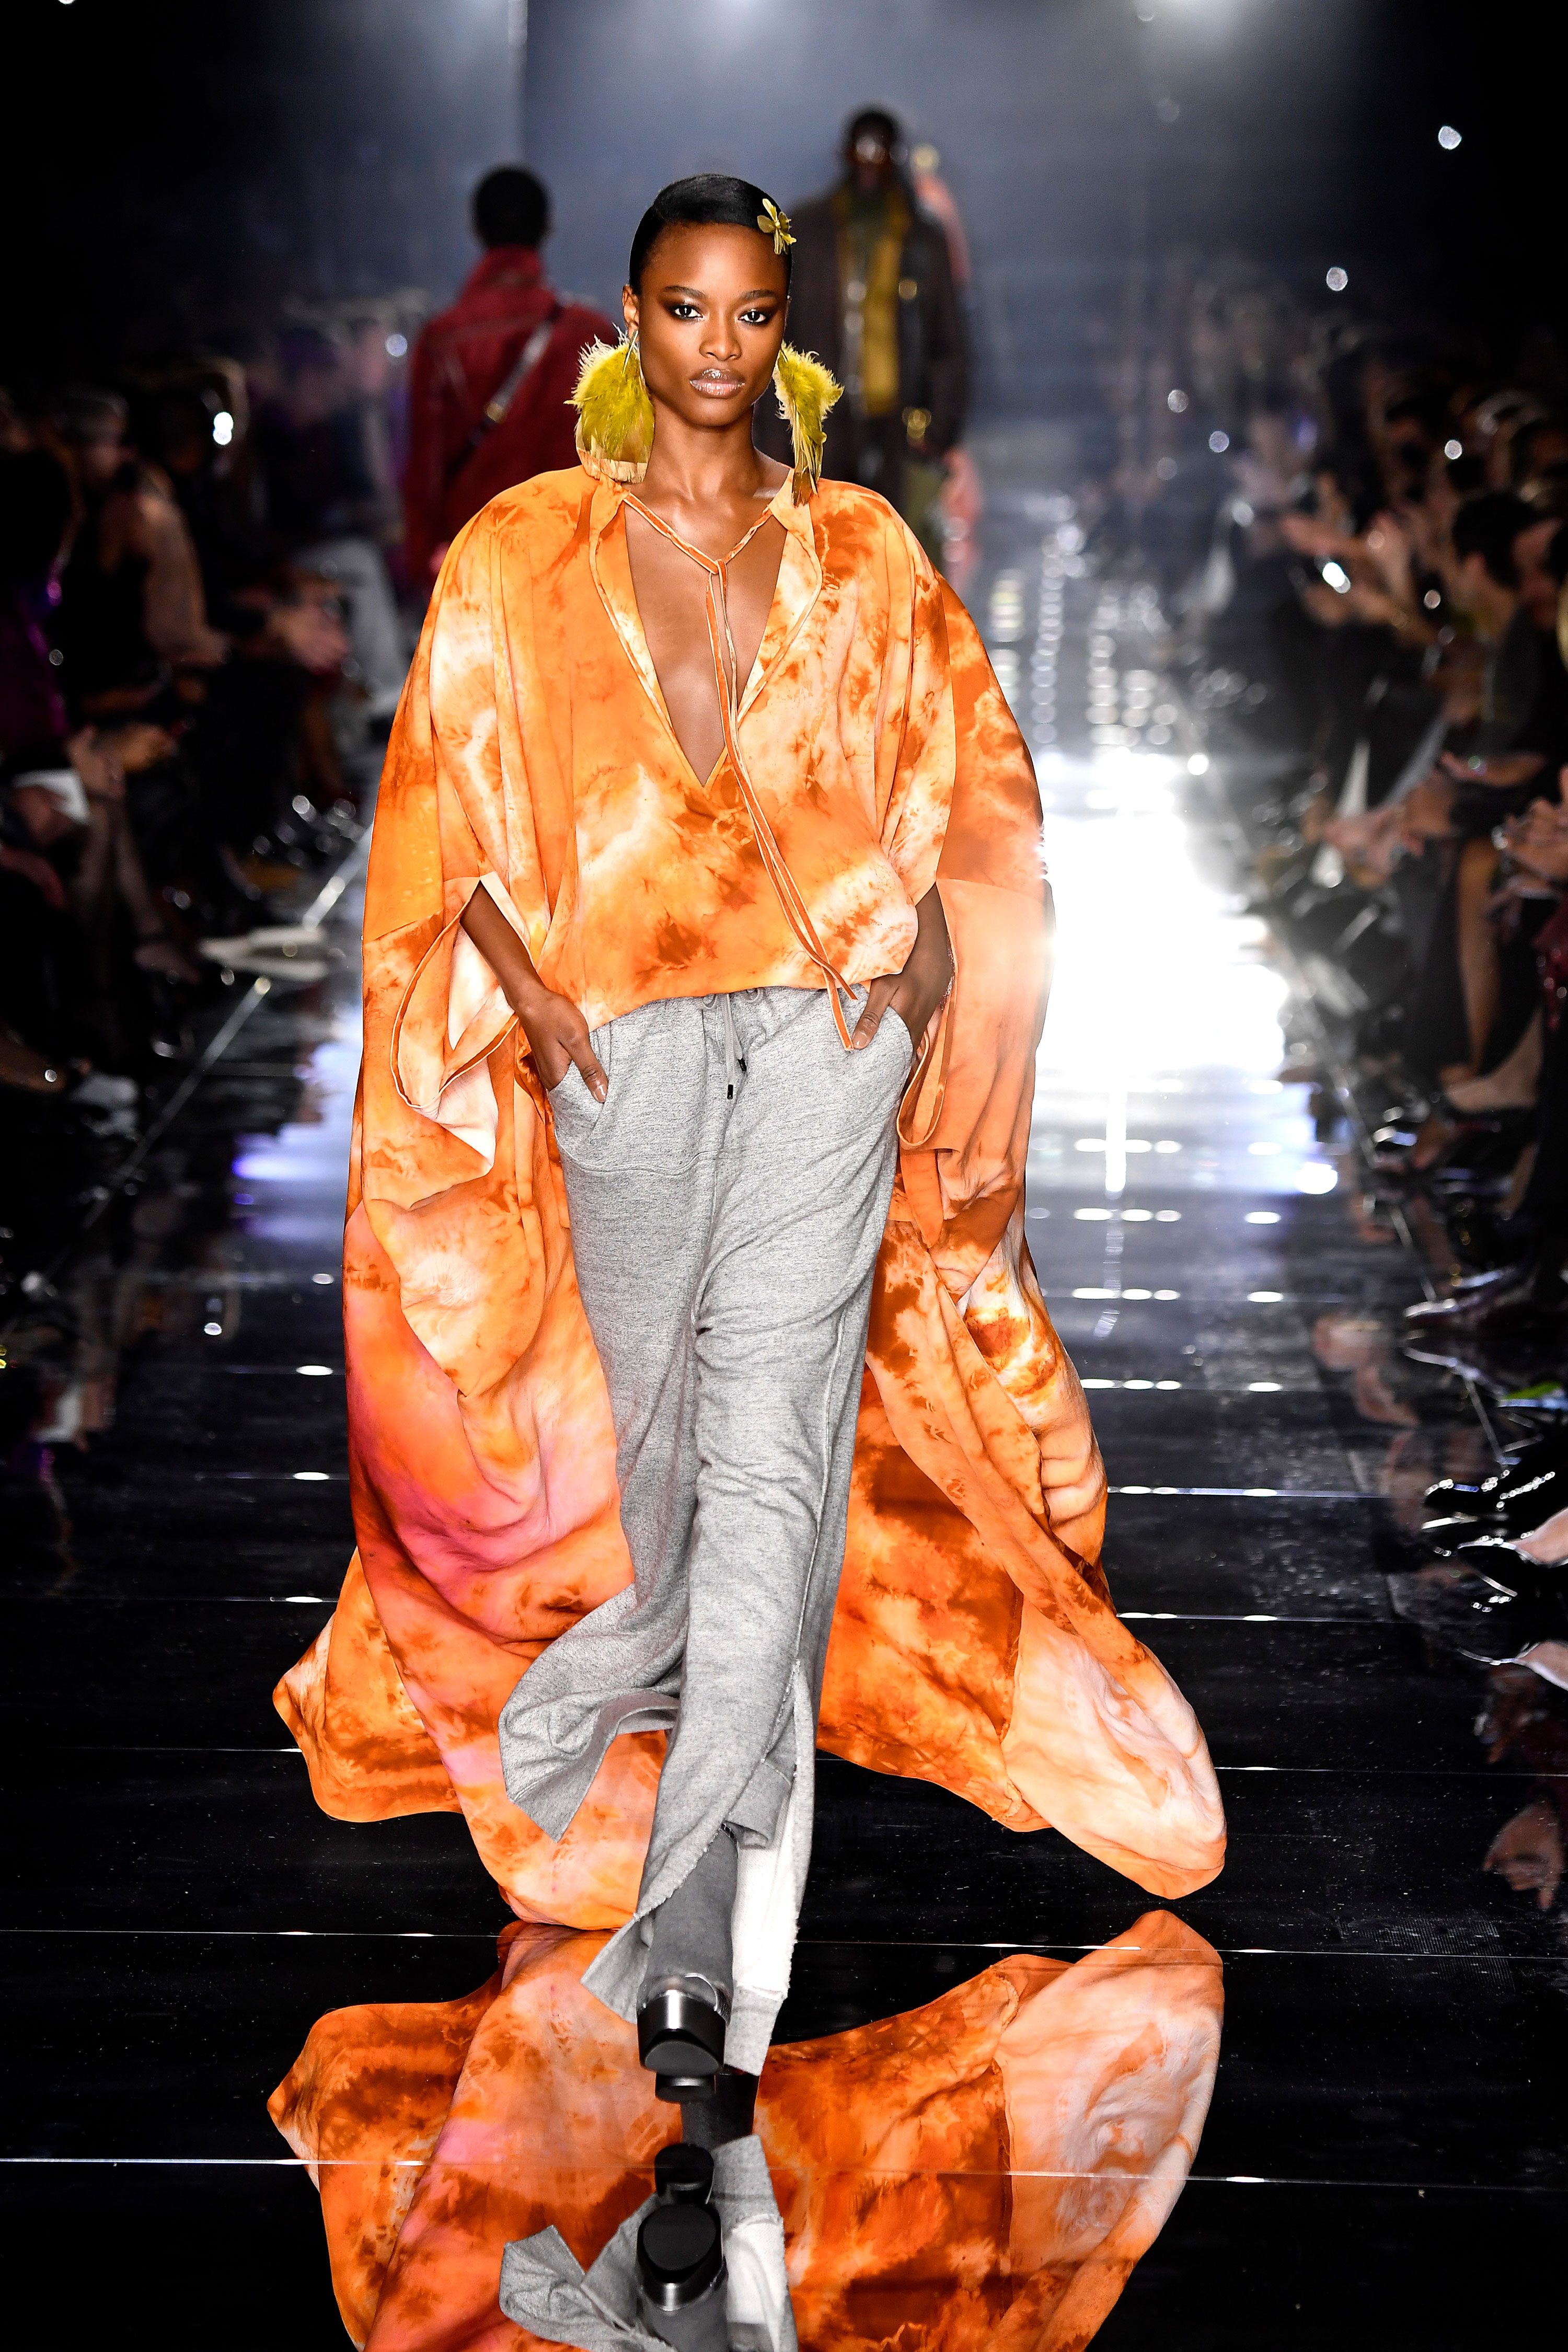 Tom Ford brings New York Fashion to LA - CNN Style